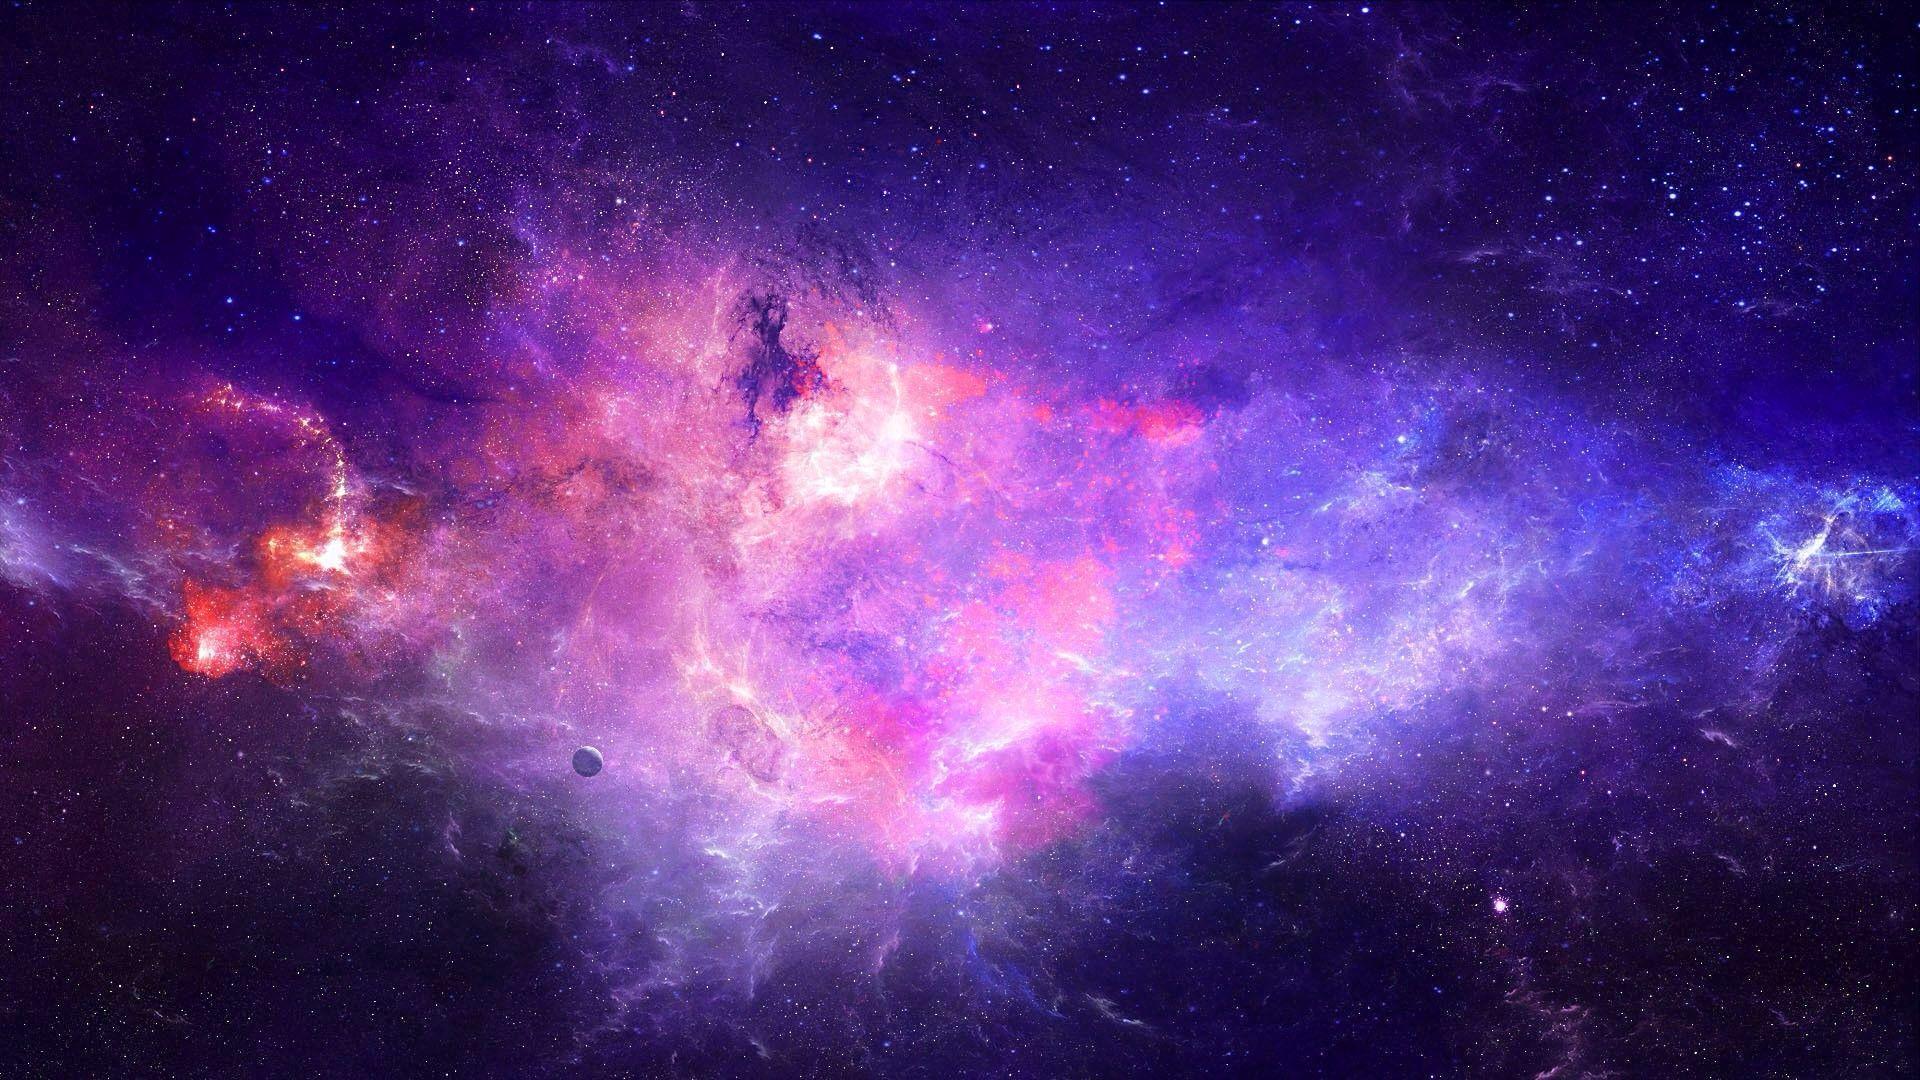 Galaxy. Galaxy wallpaper, HD galaxy wallpaper